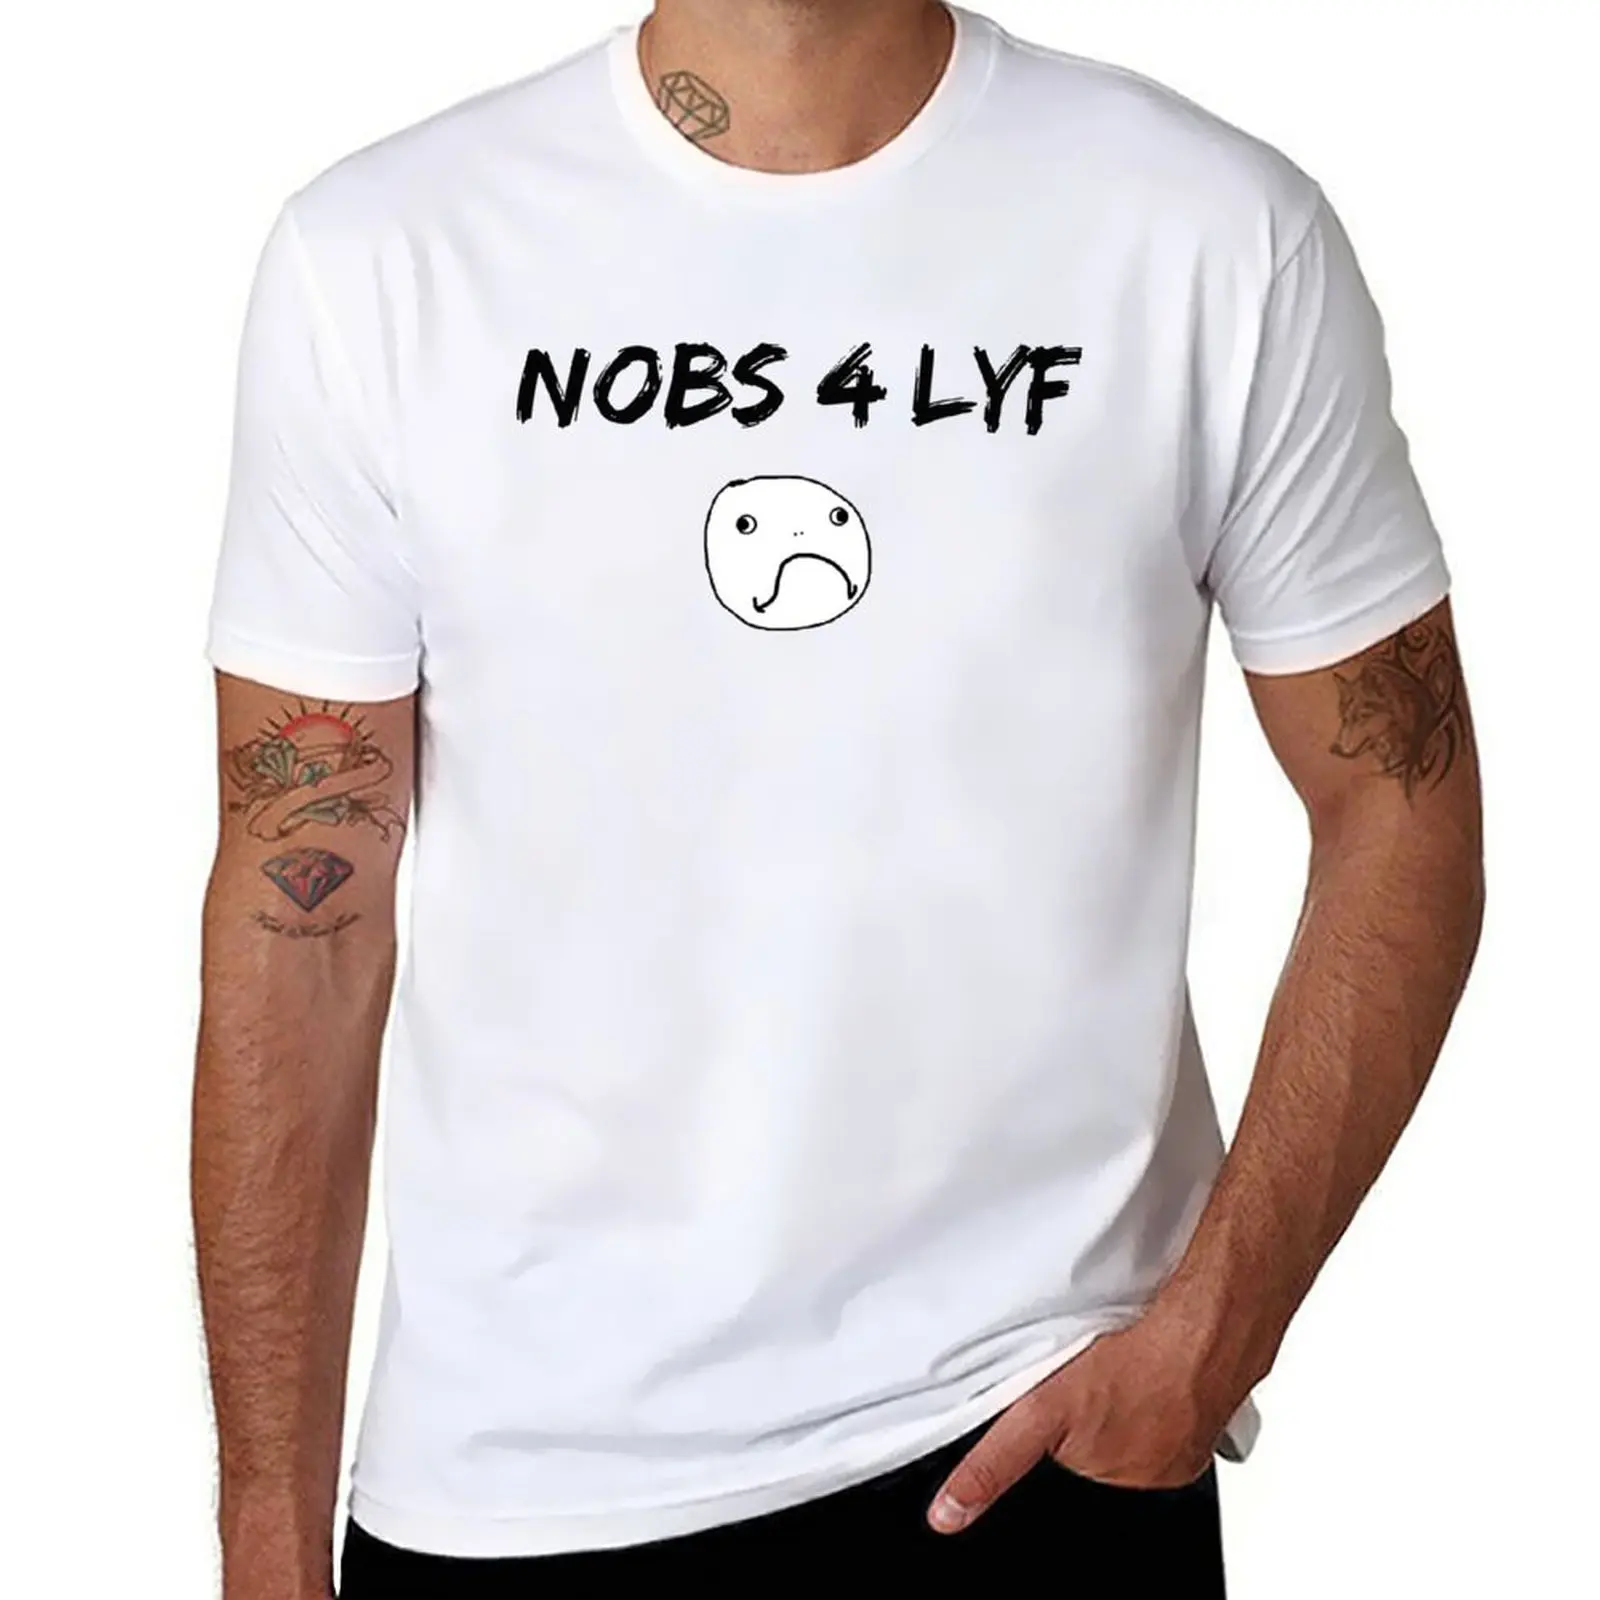 New Nobs 4 Lyf T-Shirt oversized t shirts boys white t shirts men t shirt